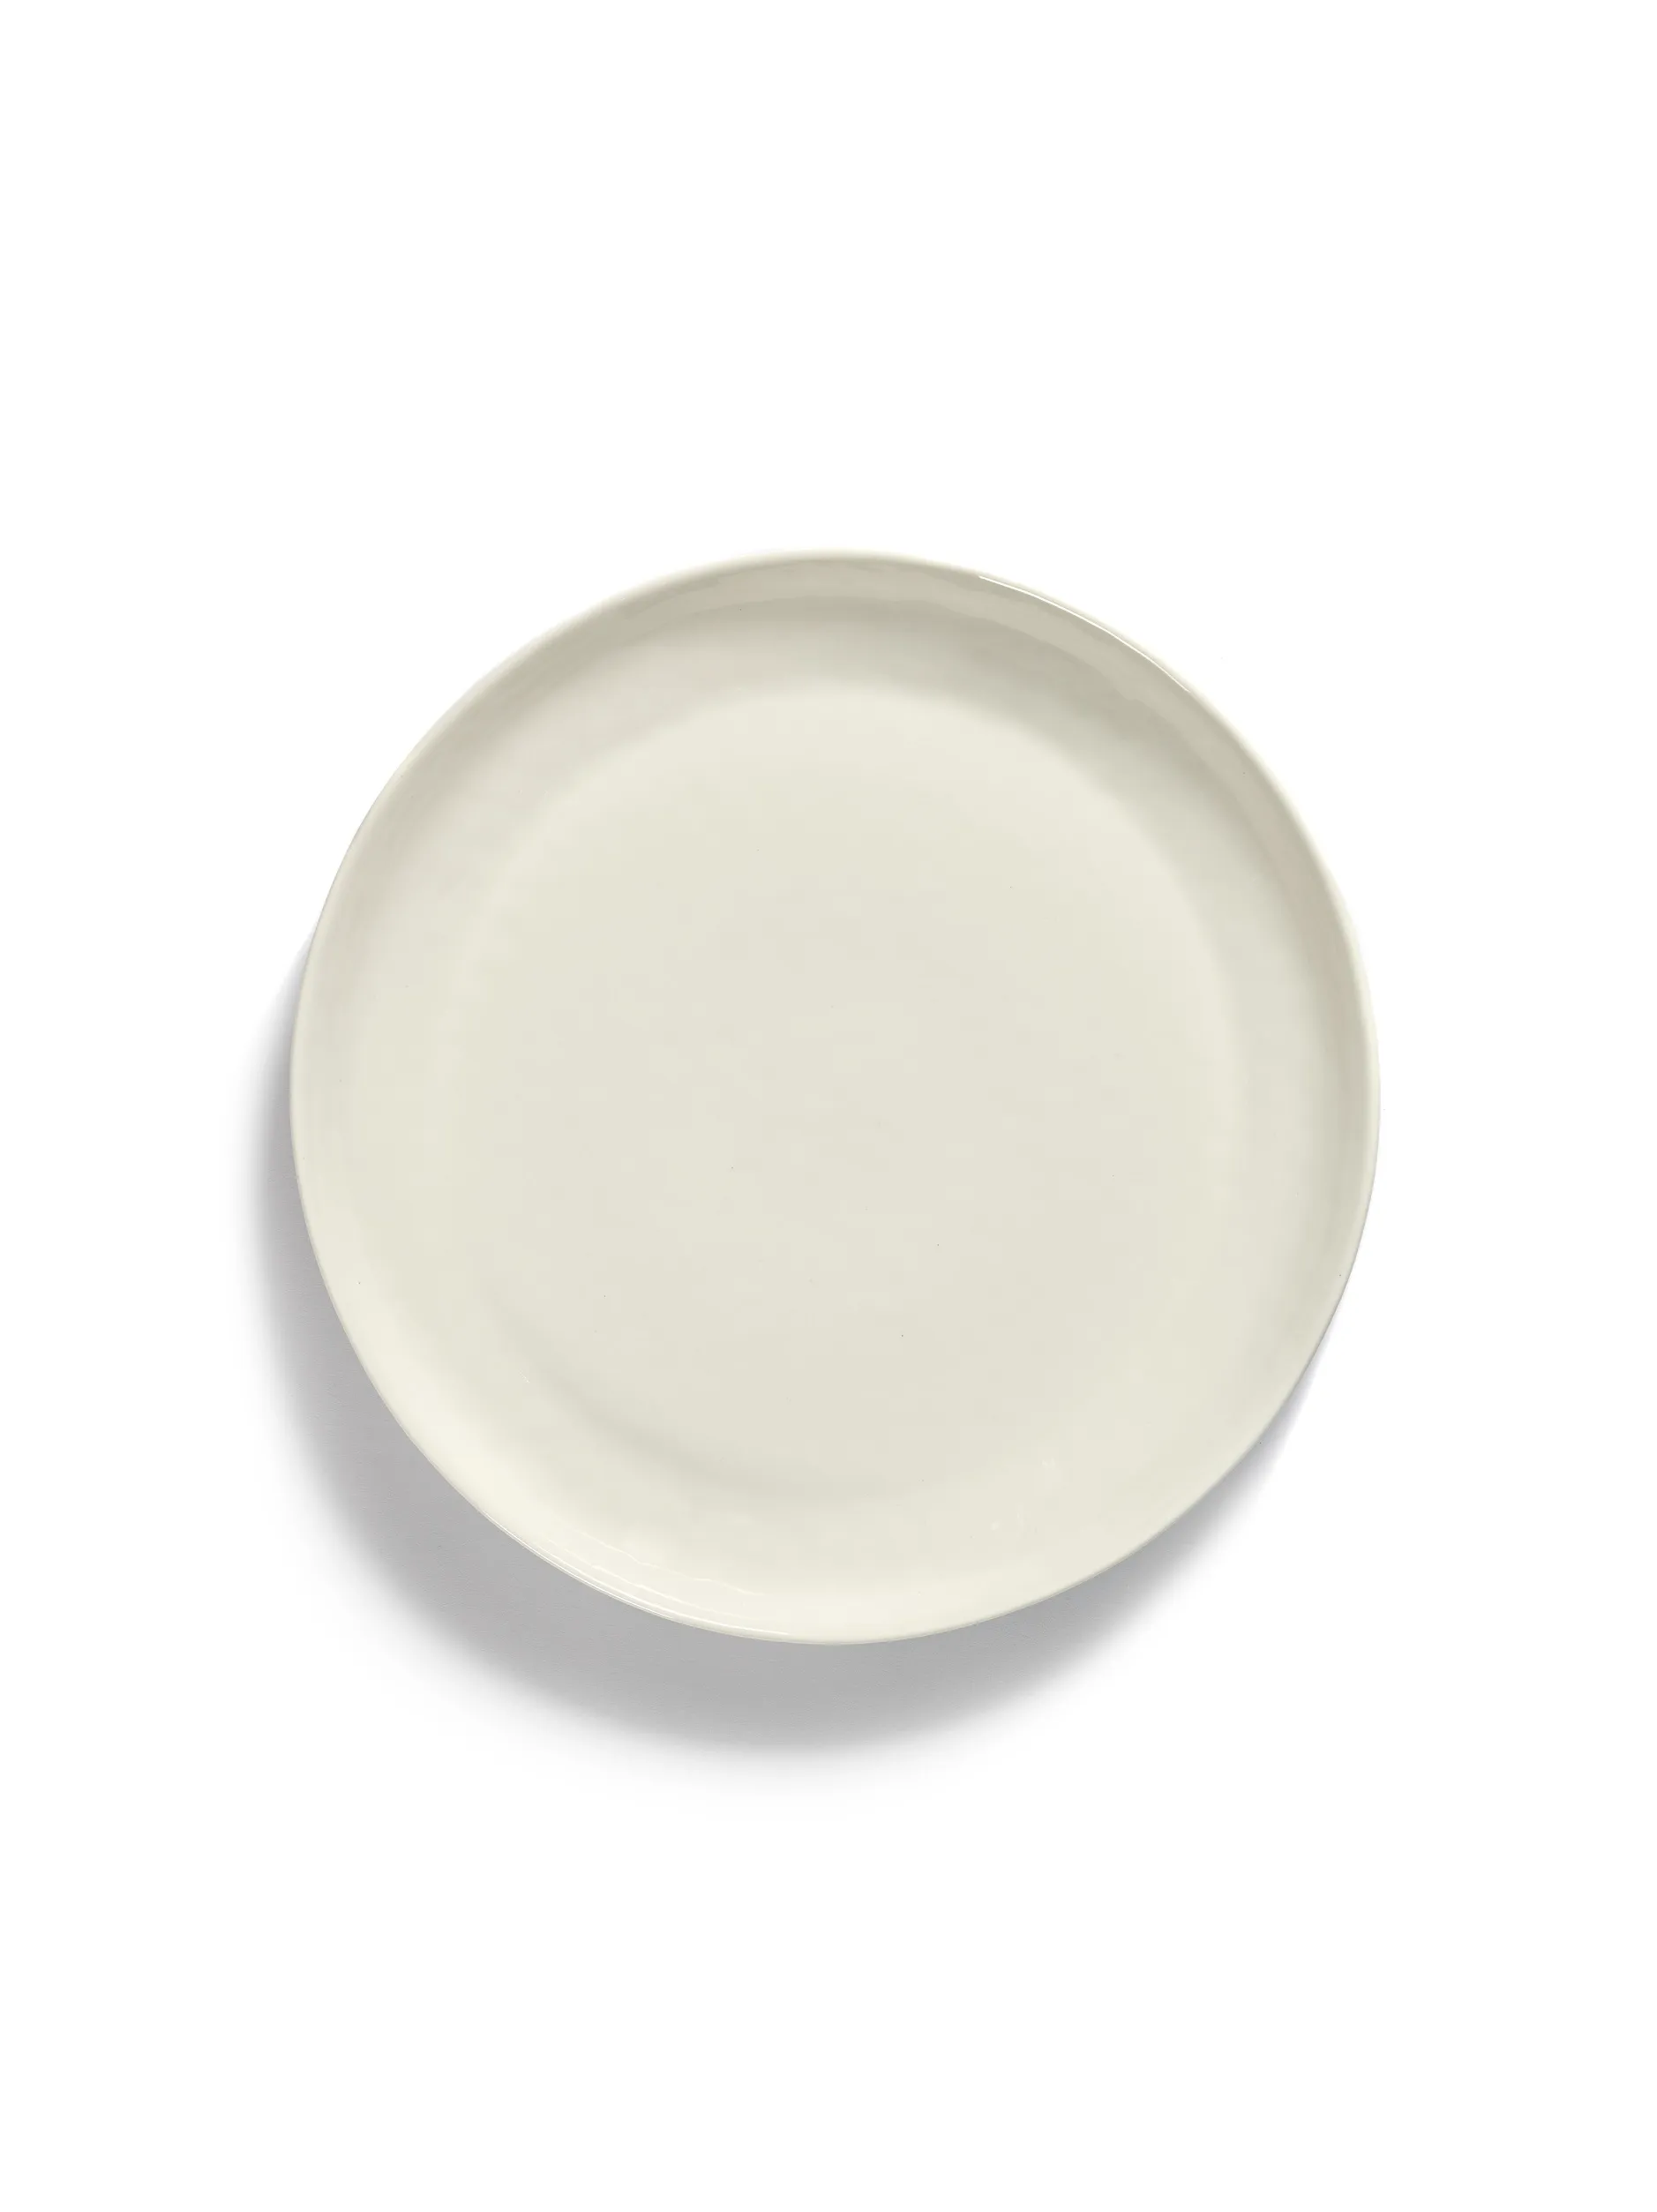 Piatto Da Portata S Bianco-Righe Blu Feast Ottolenghi by Serax L 35 W 35 H 4 CM